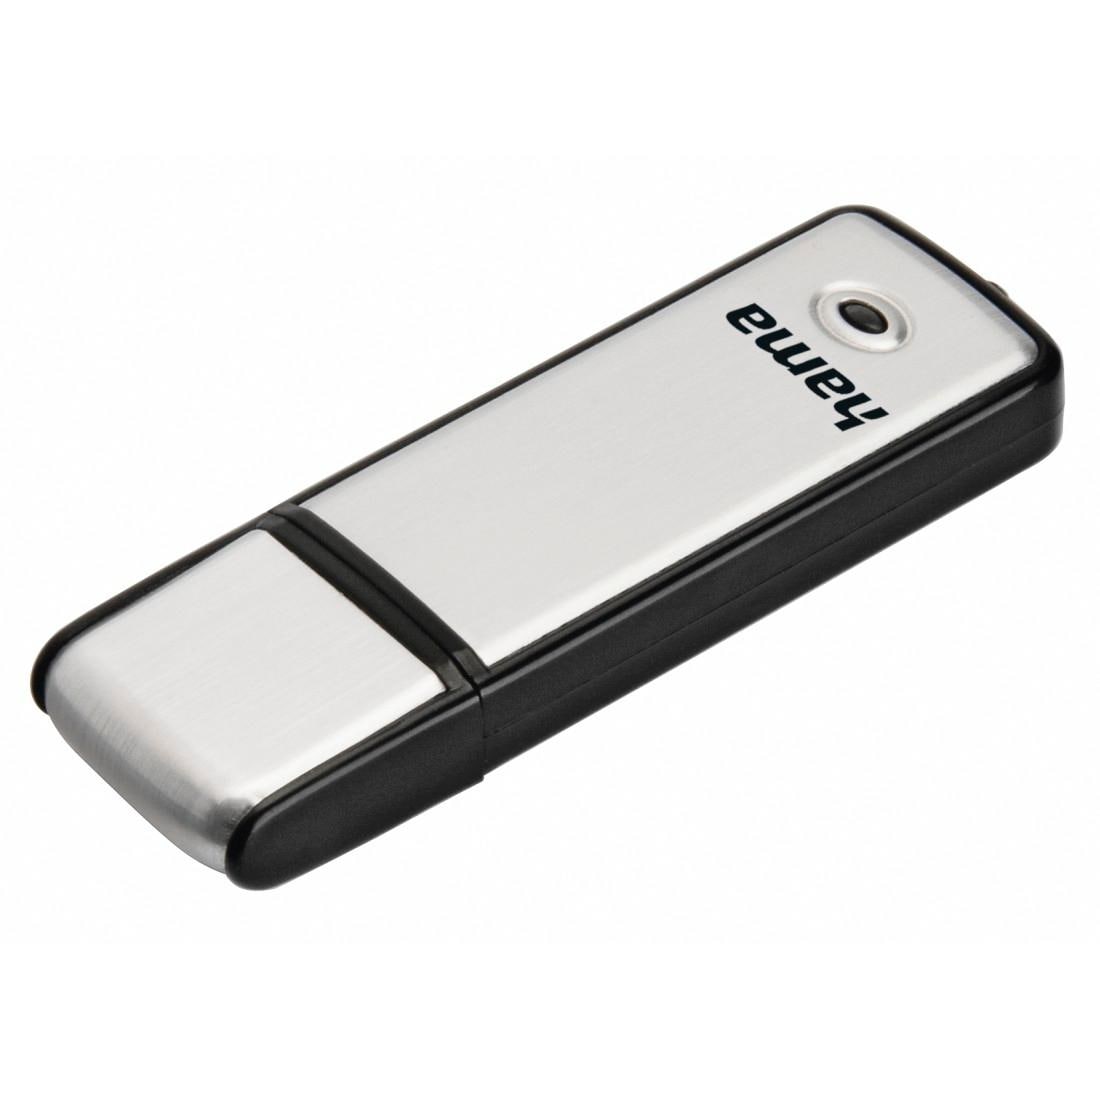 Hama USB-Stick »USB-Stick "Fancy", USB 2.0, 64 GB, 10MB/s, Schwarz/Silber«, (Lesegeschwindigkeit 10 MB/s)